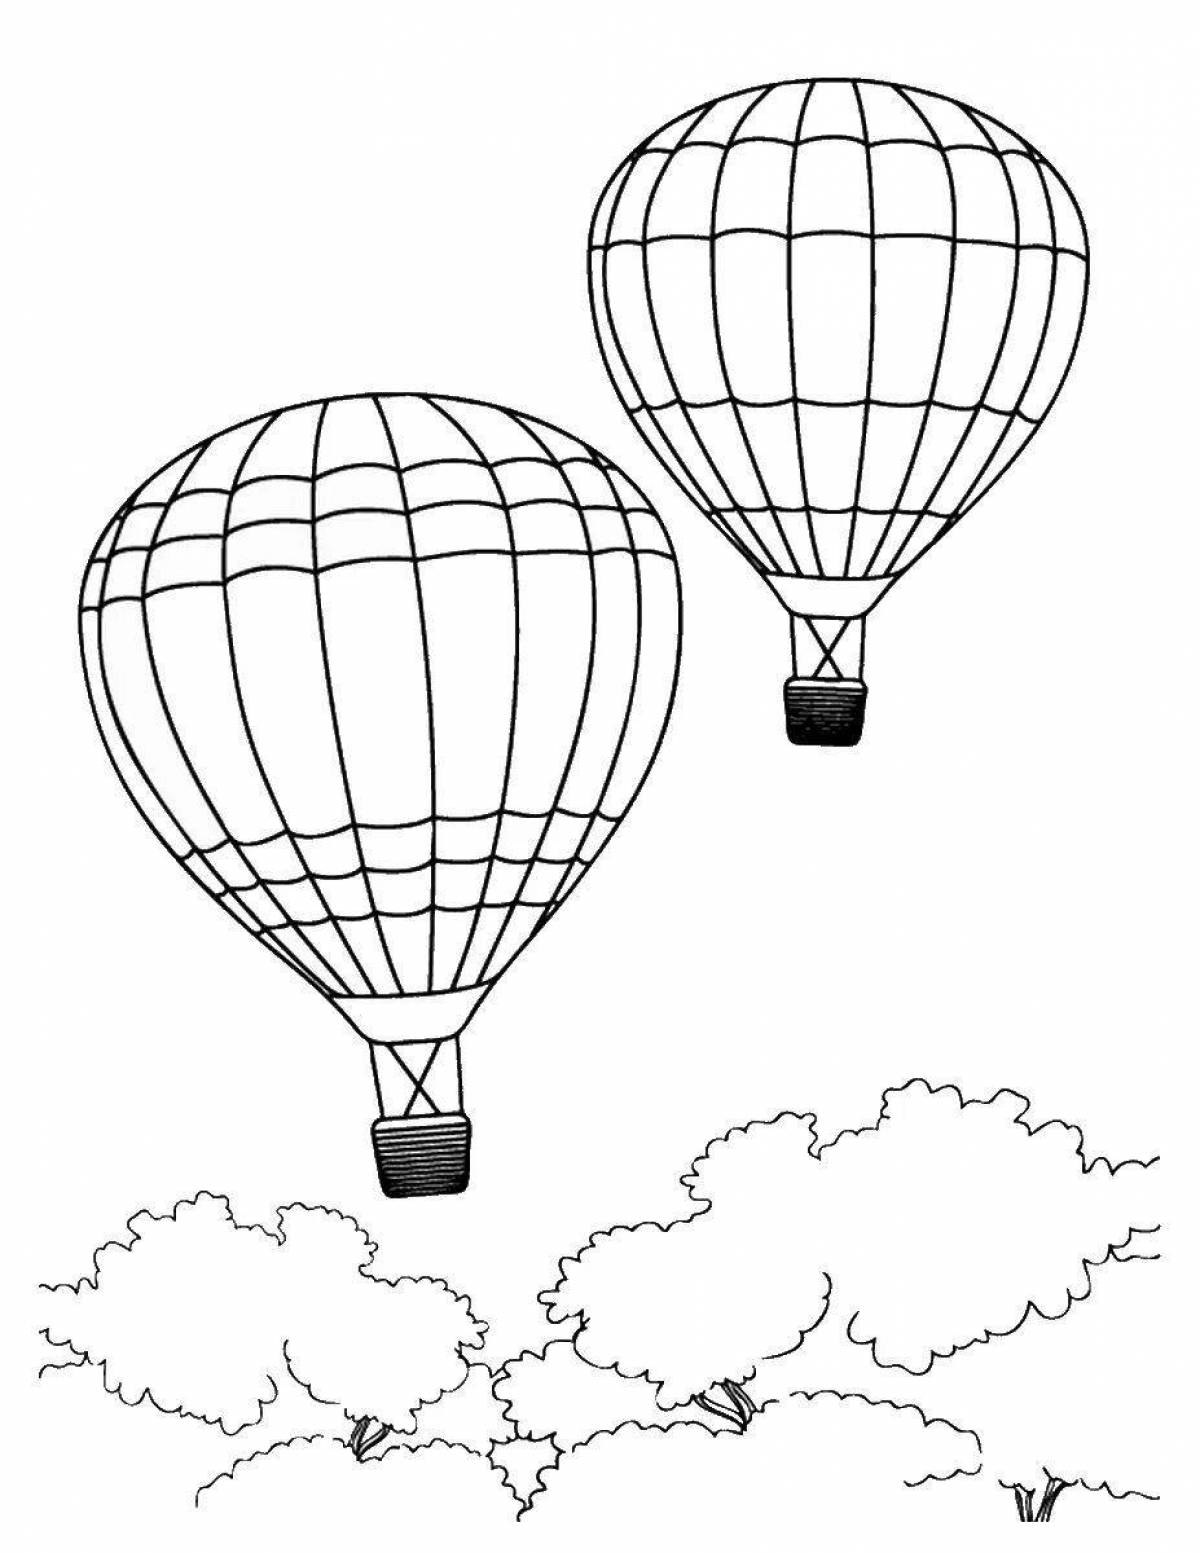 Drawing of a luminous balloon